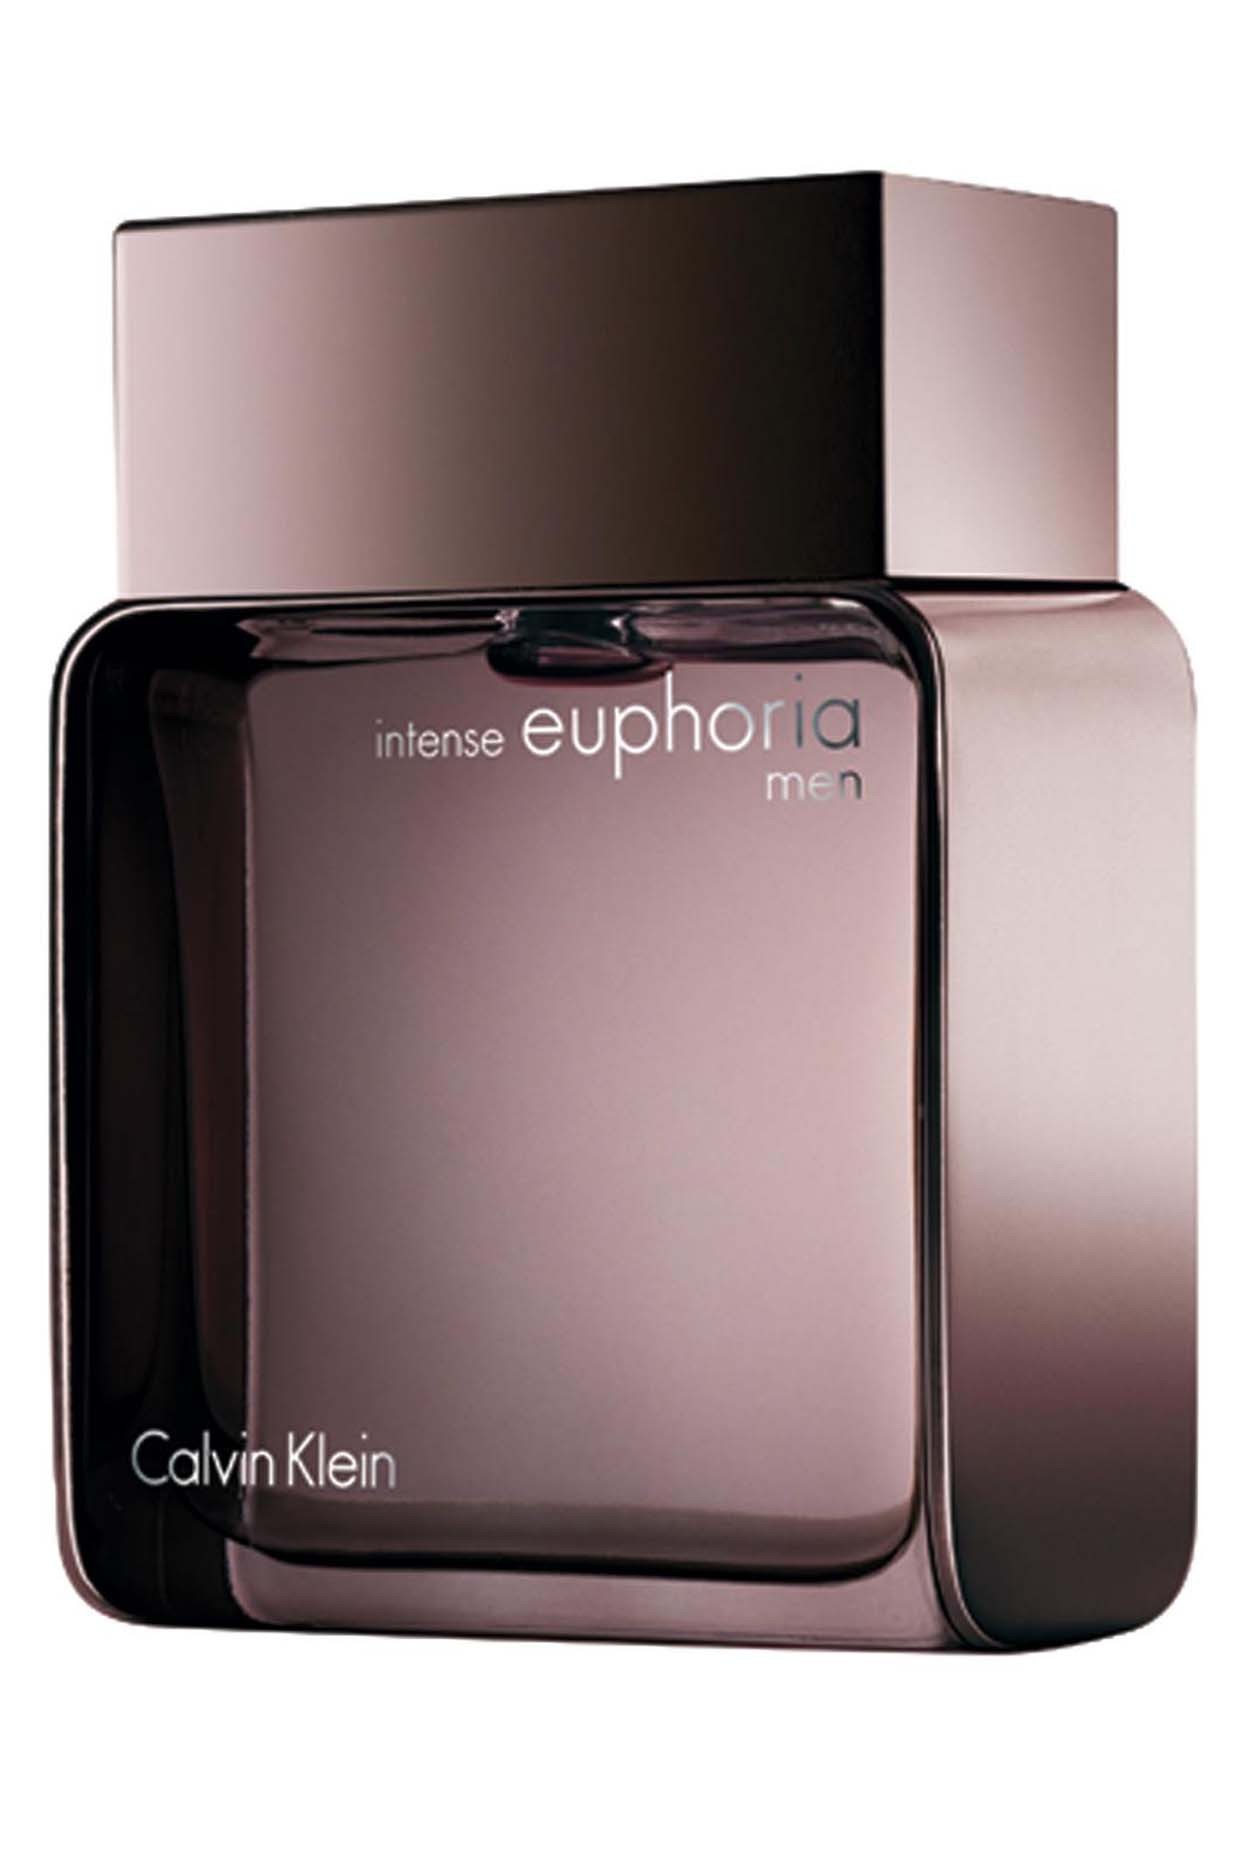 Calvin Klein Euphoria Intense Edt 100 Ml Erkek Parfum Parfumbank Orjinal Parfum Magazasi